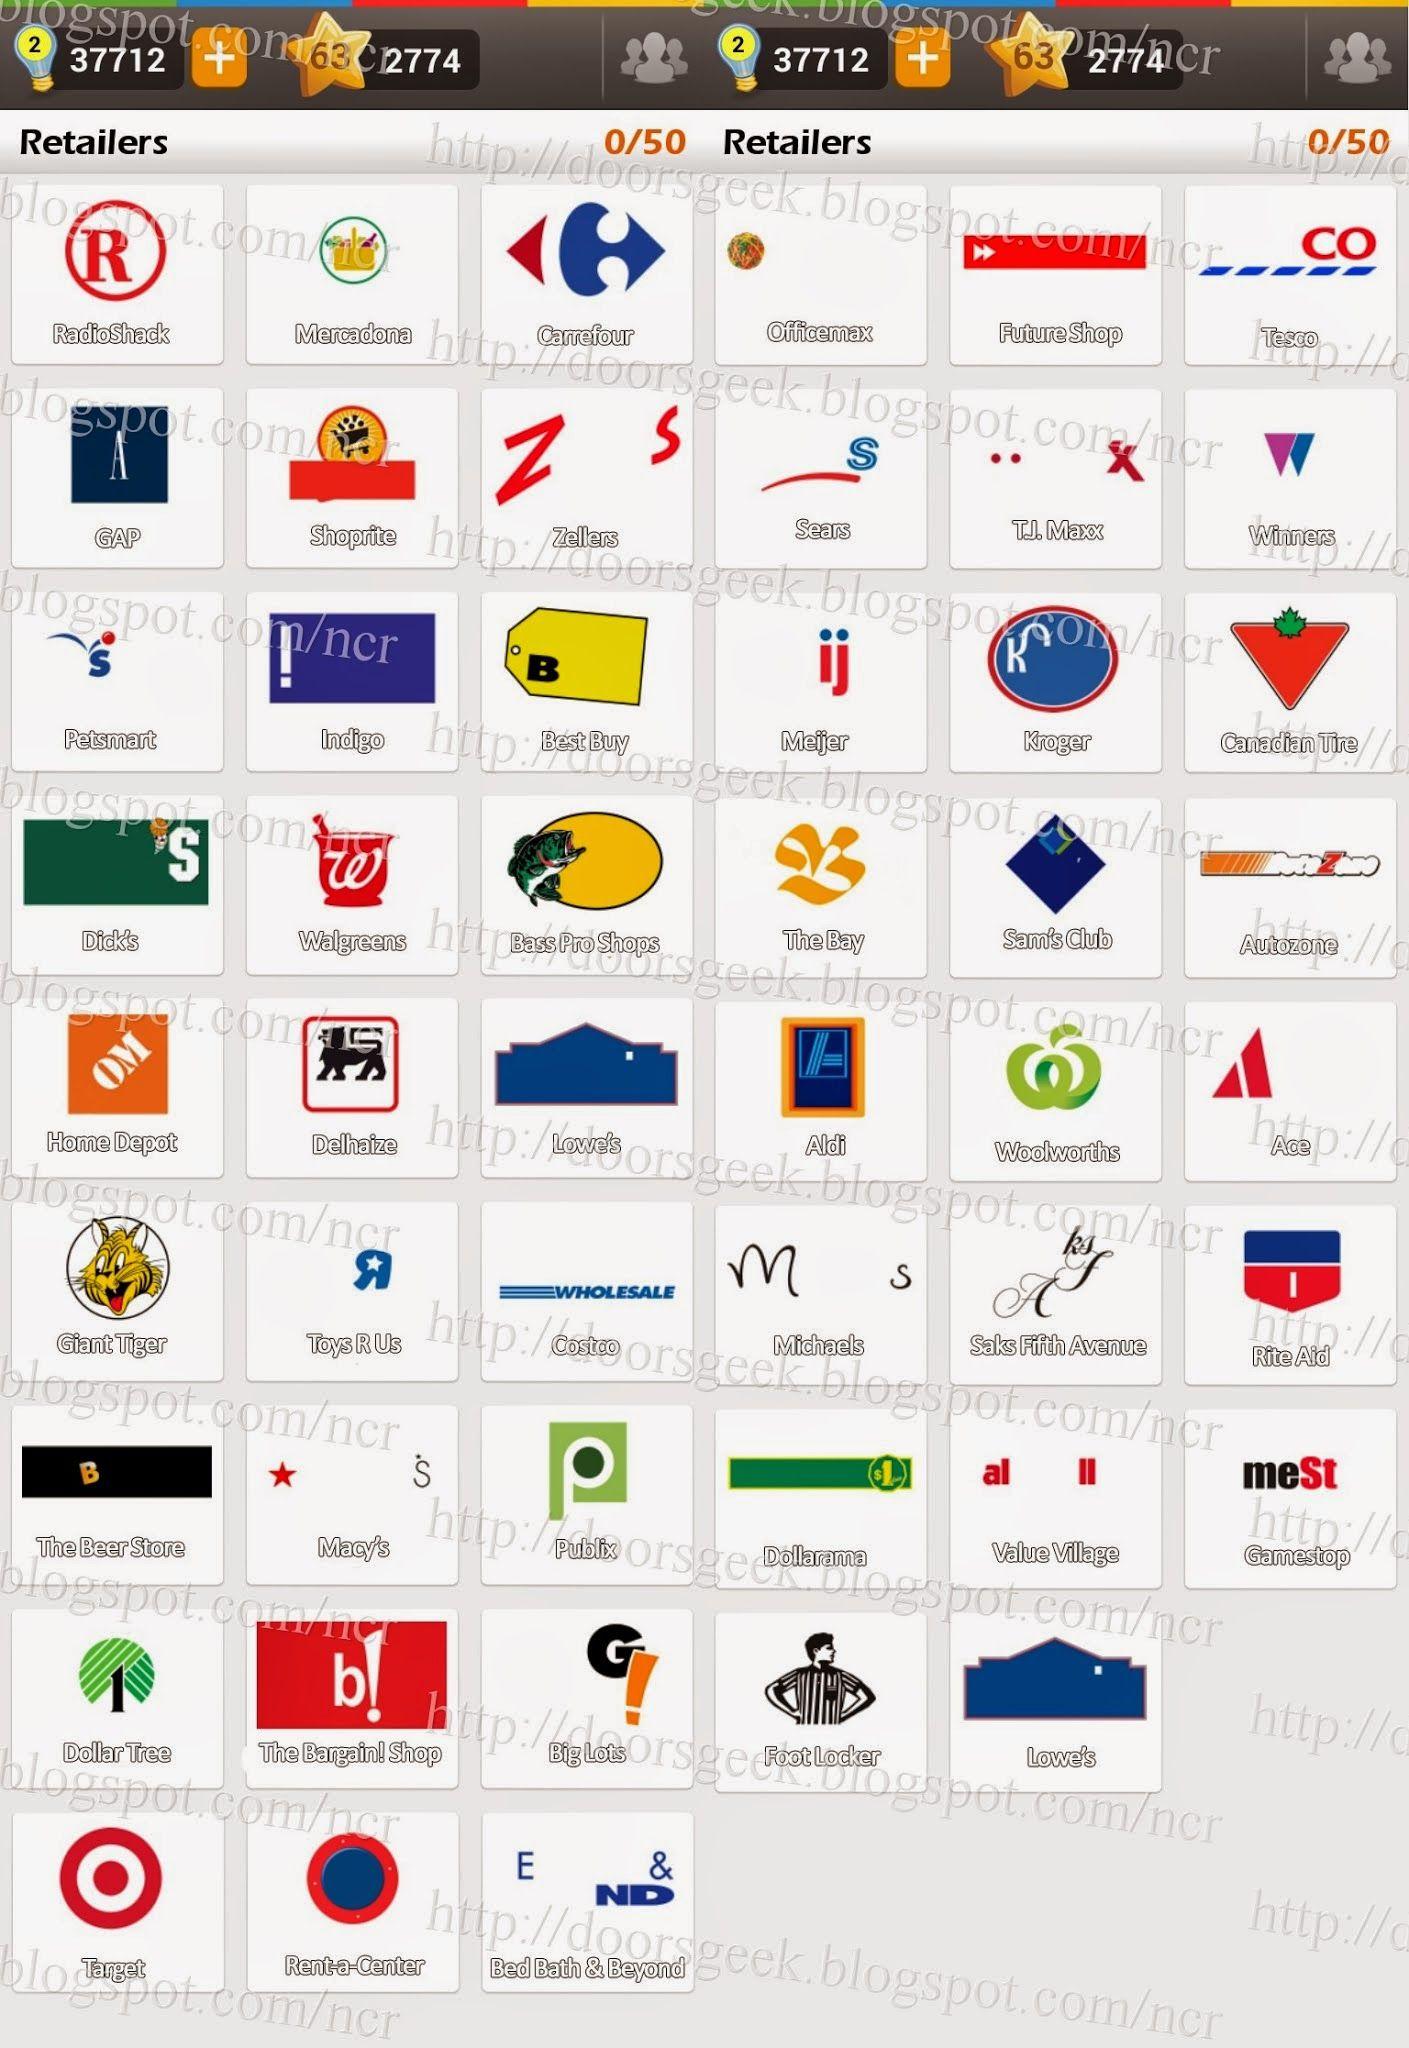 Retailers Logo - Logo Game: Guess the Brand [Bonus] Retailers ~ Doors Geek